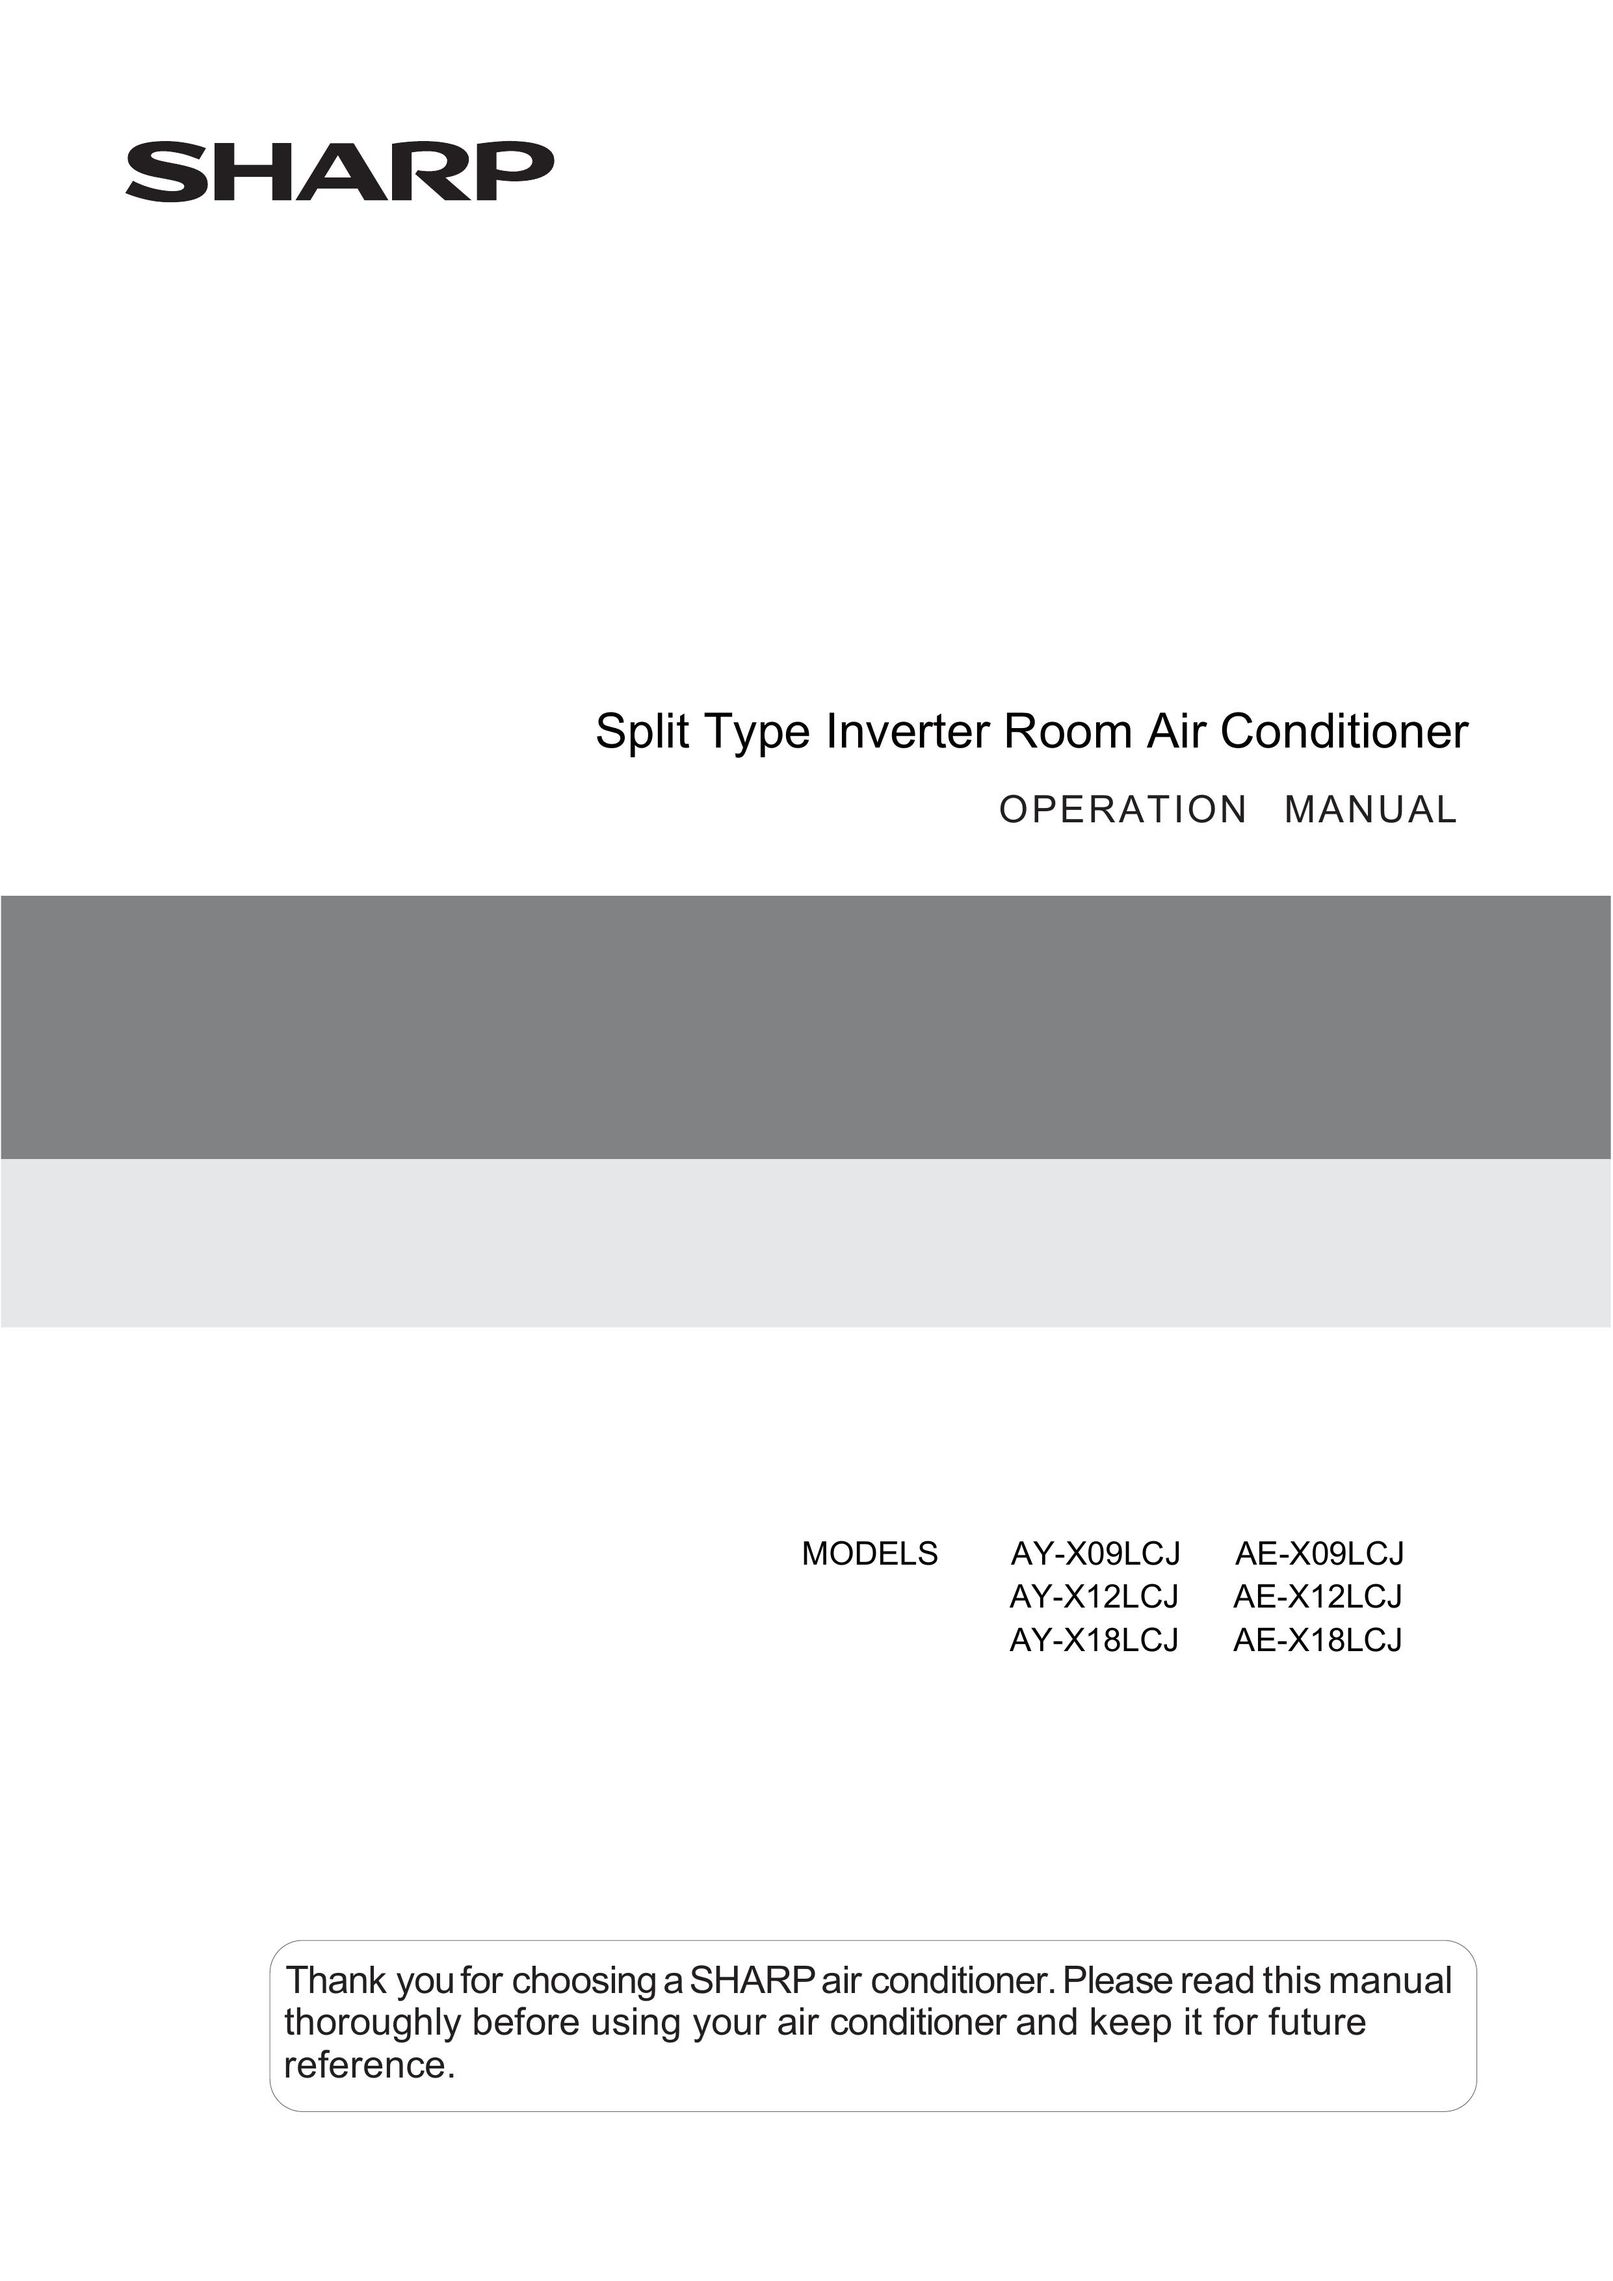 Sharp AE-X18LCJ Air Conditioner User Manual